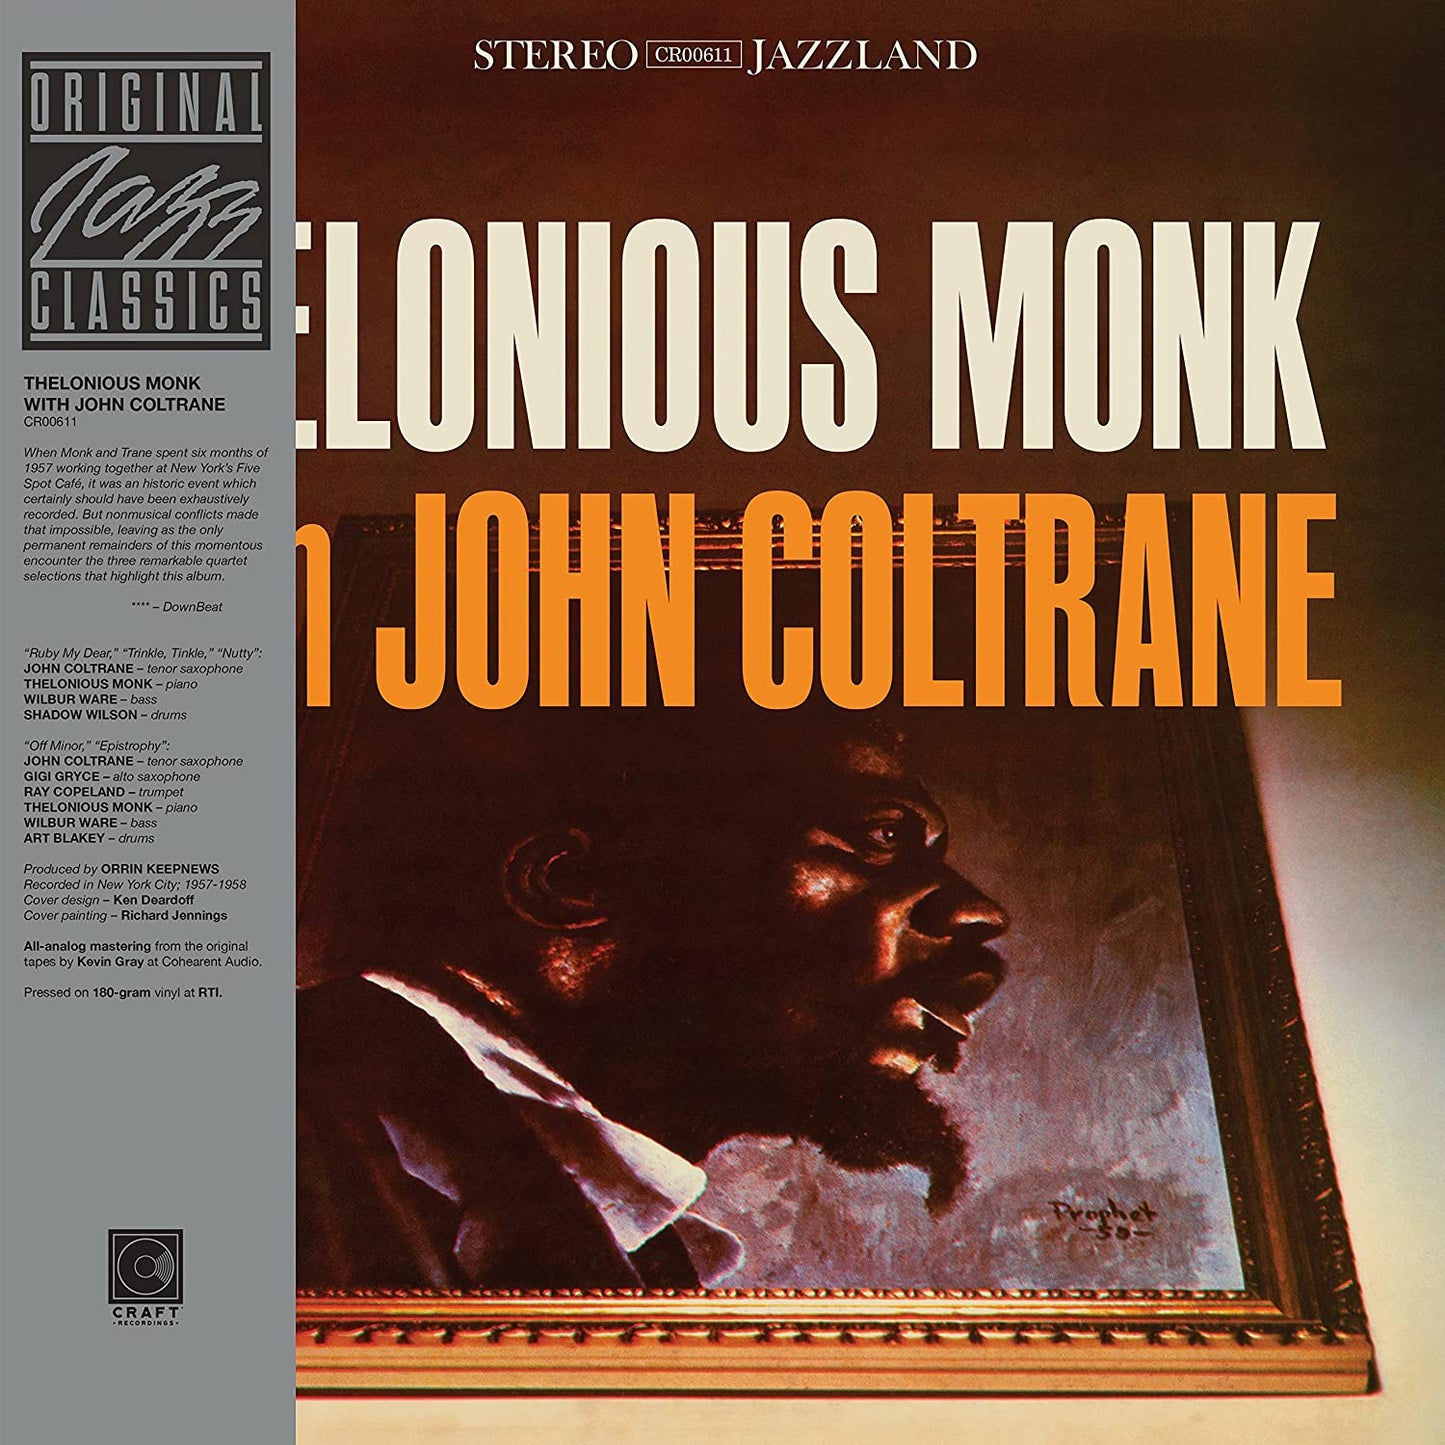 Monk, Thelonious/Coltrane, John/Thelonious Monk with John Coltrane (Original Jazz Classics Series) [LP]